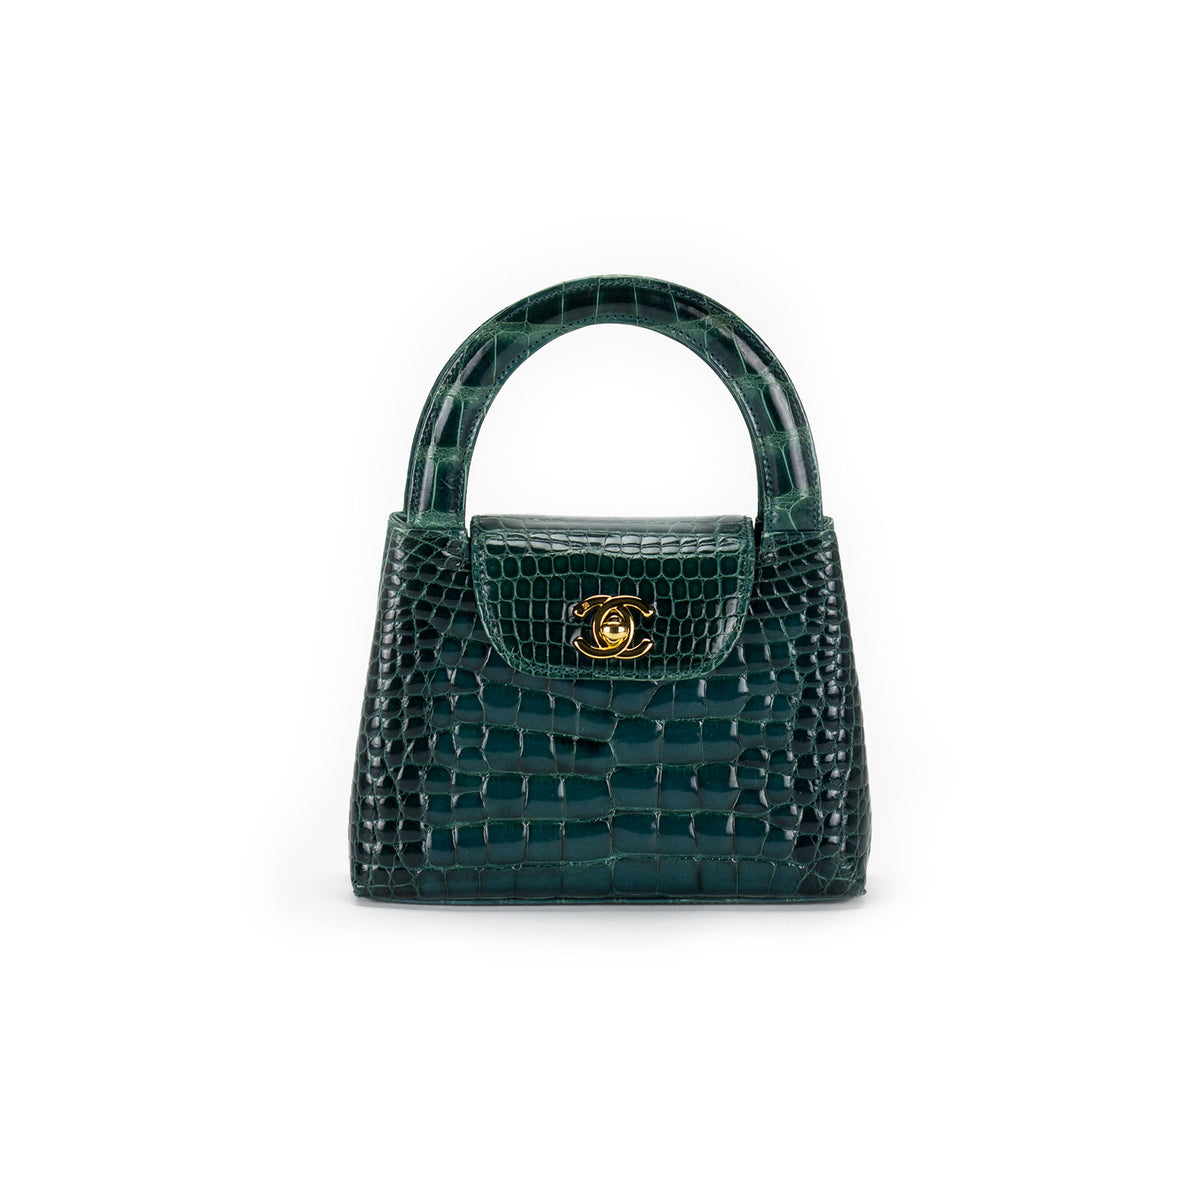 Coco luxe alligator handbag Chanel Green in Alligator - 18704949